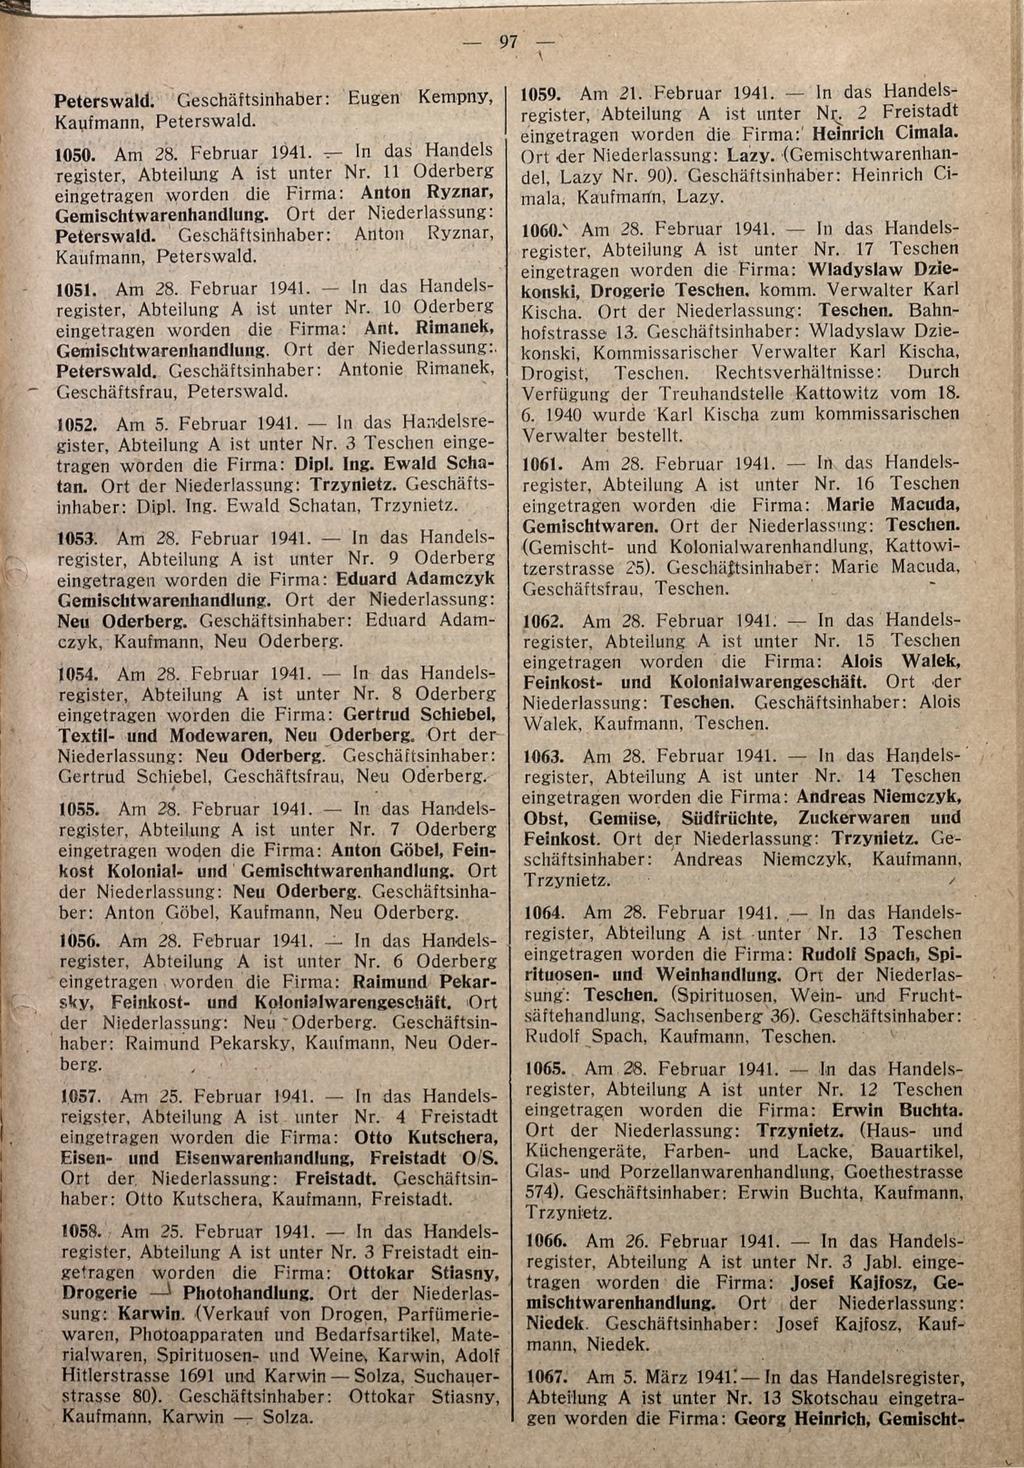 Peterswald. Geschäftsinhaber: Eugen Kempny, Kaufmann, Peterswald. 1050. Am 28. Februar 1941. In das Handels register, Abteilung A ist unter Nr.